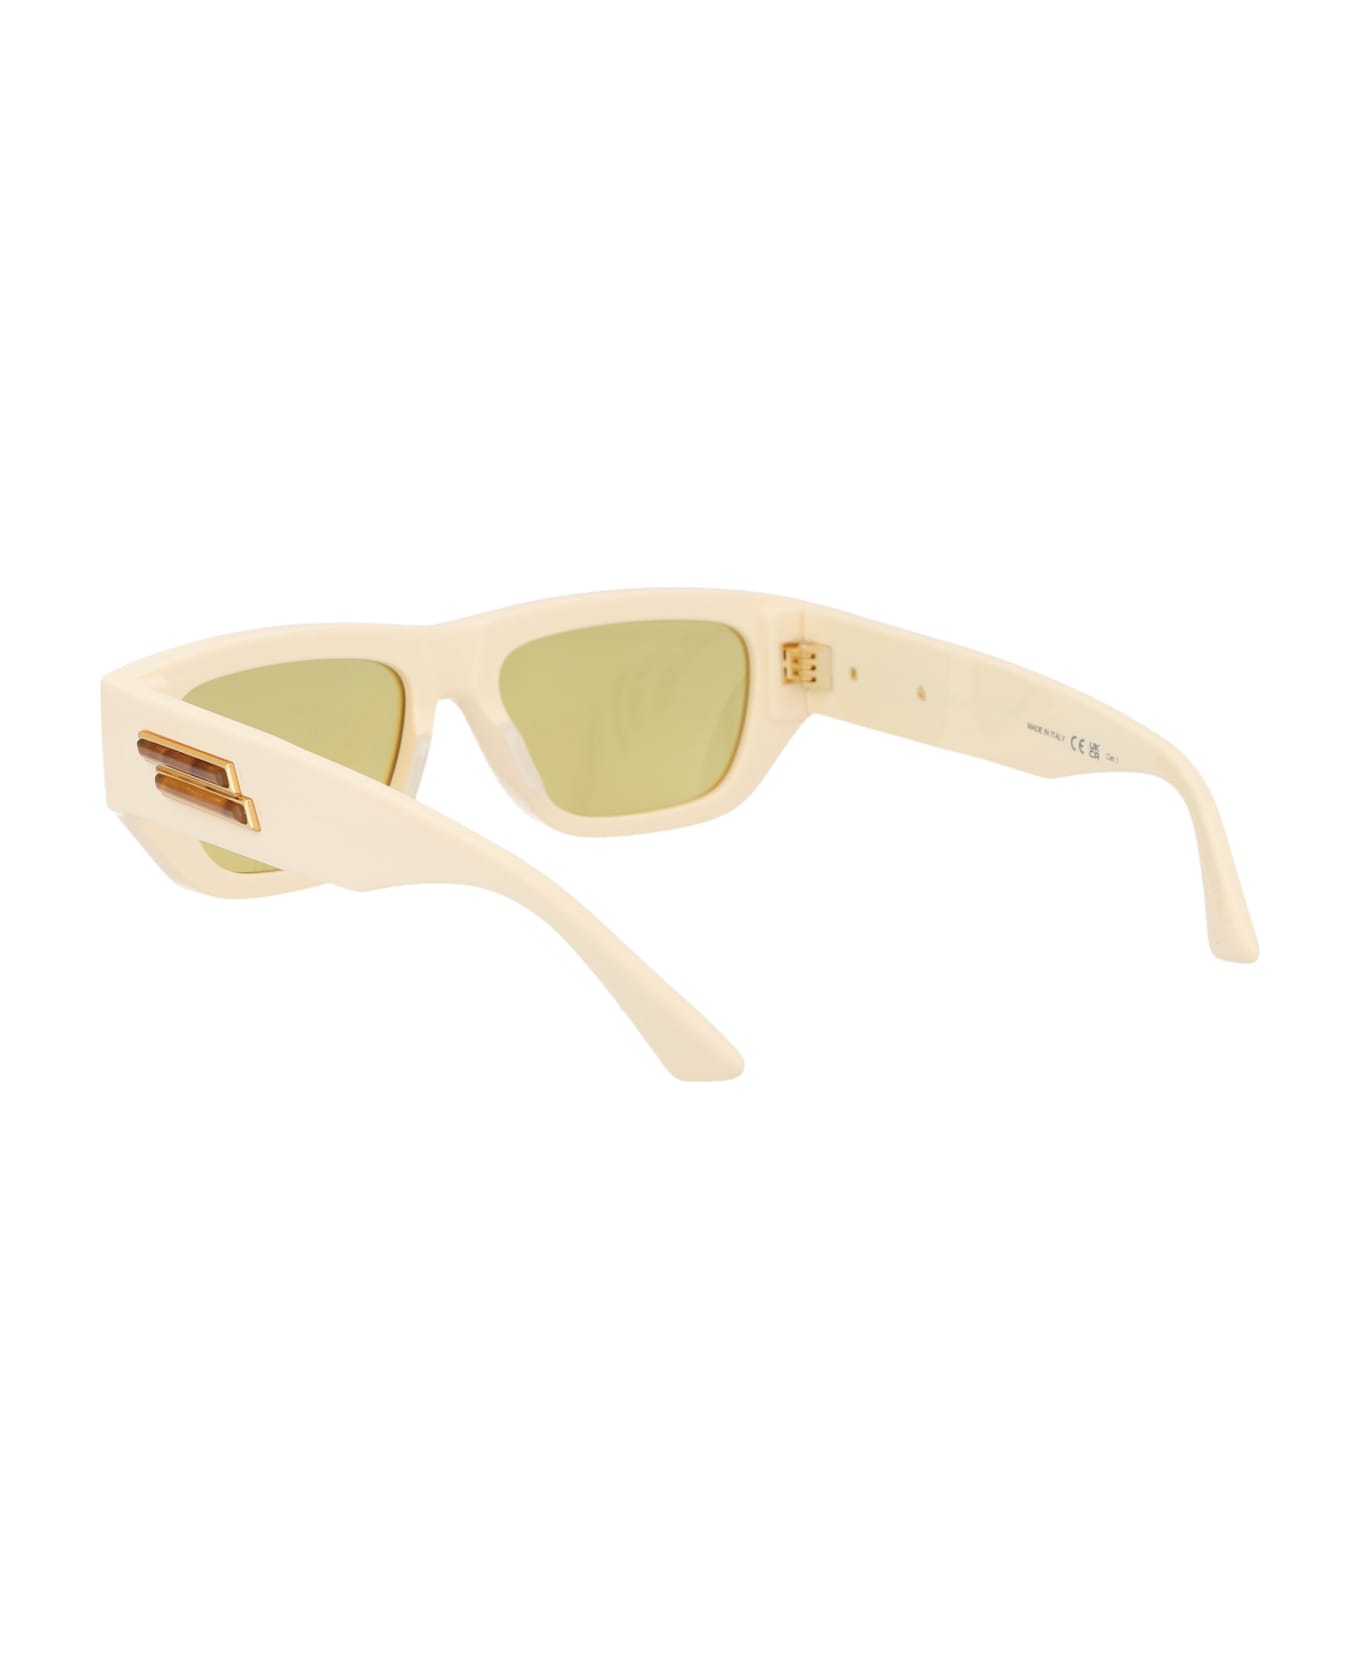 Bottega Veneta Eyewear Bv1252s Sunglasses - 003 IVORY IVORY YELLOW サングラス